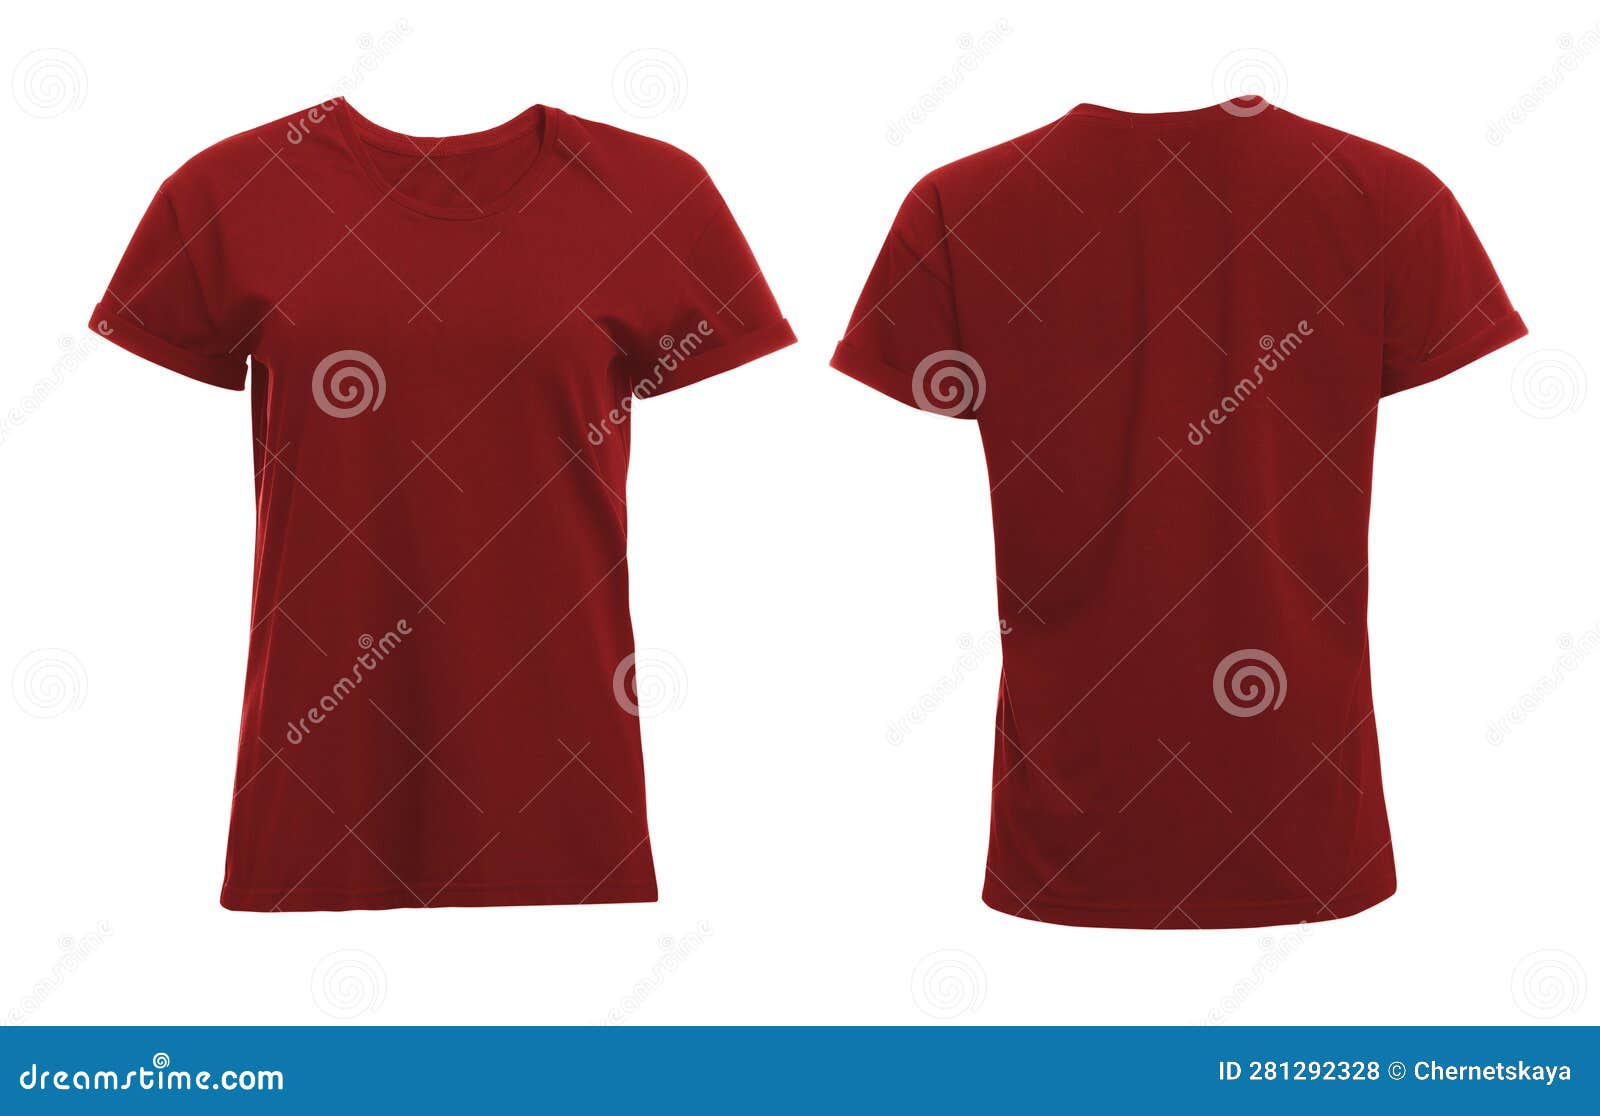 LNDR | Red Women‘s T-shirt | YOOX